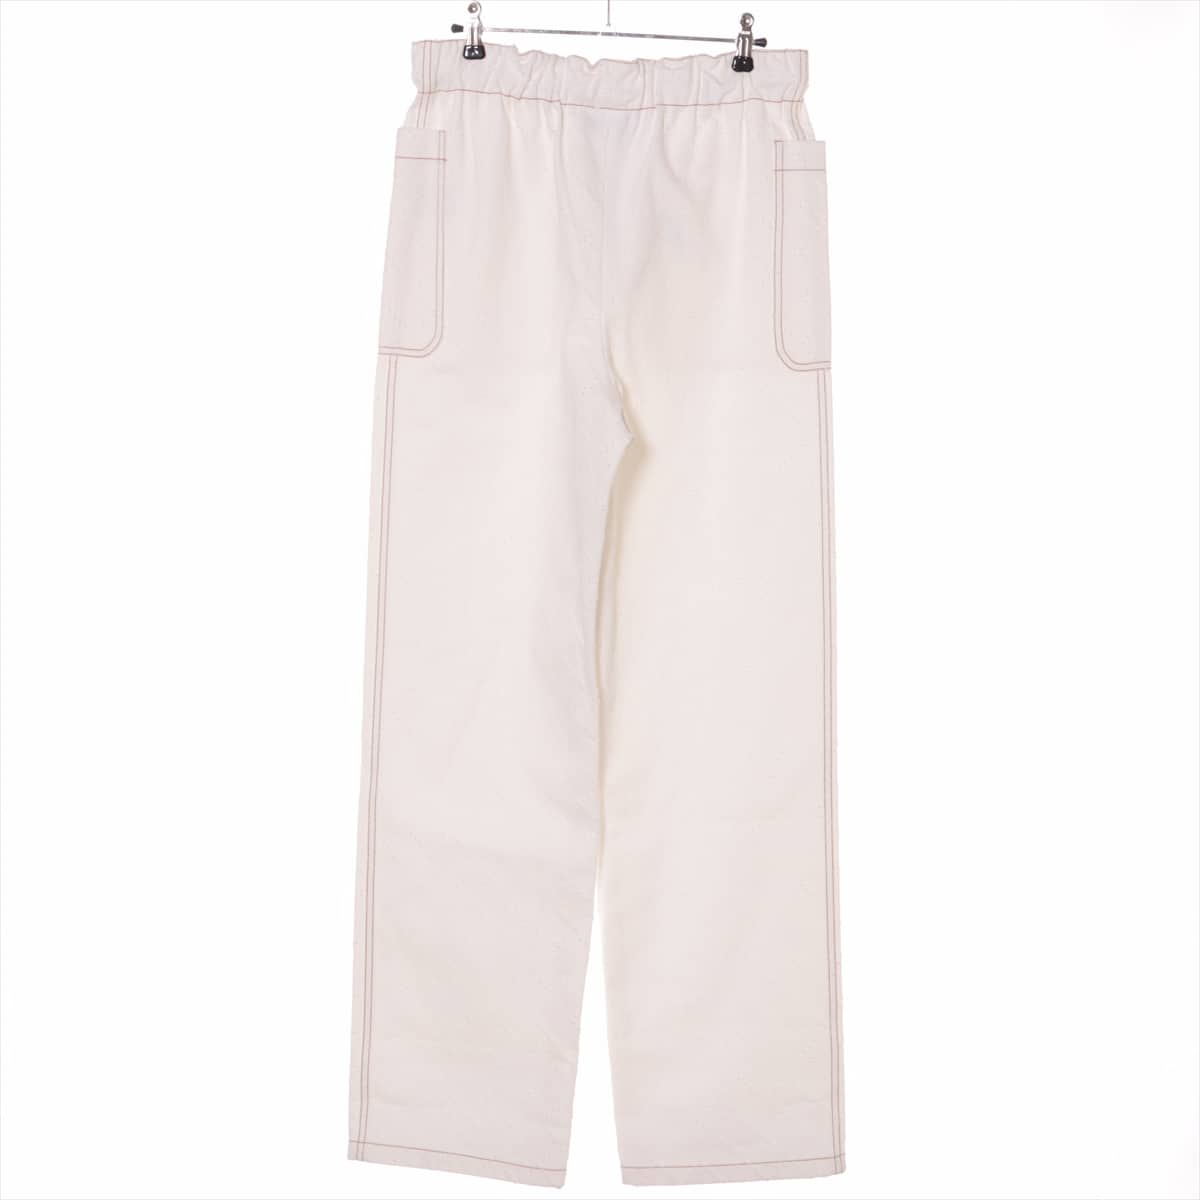 Chanel P60 Cotton Denim pants 38 Ladies' White